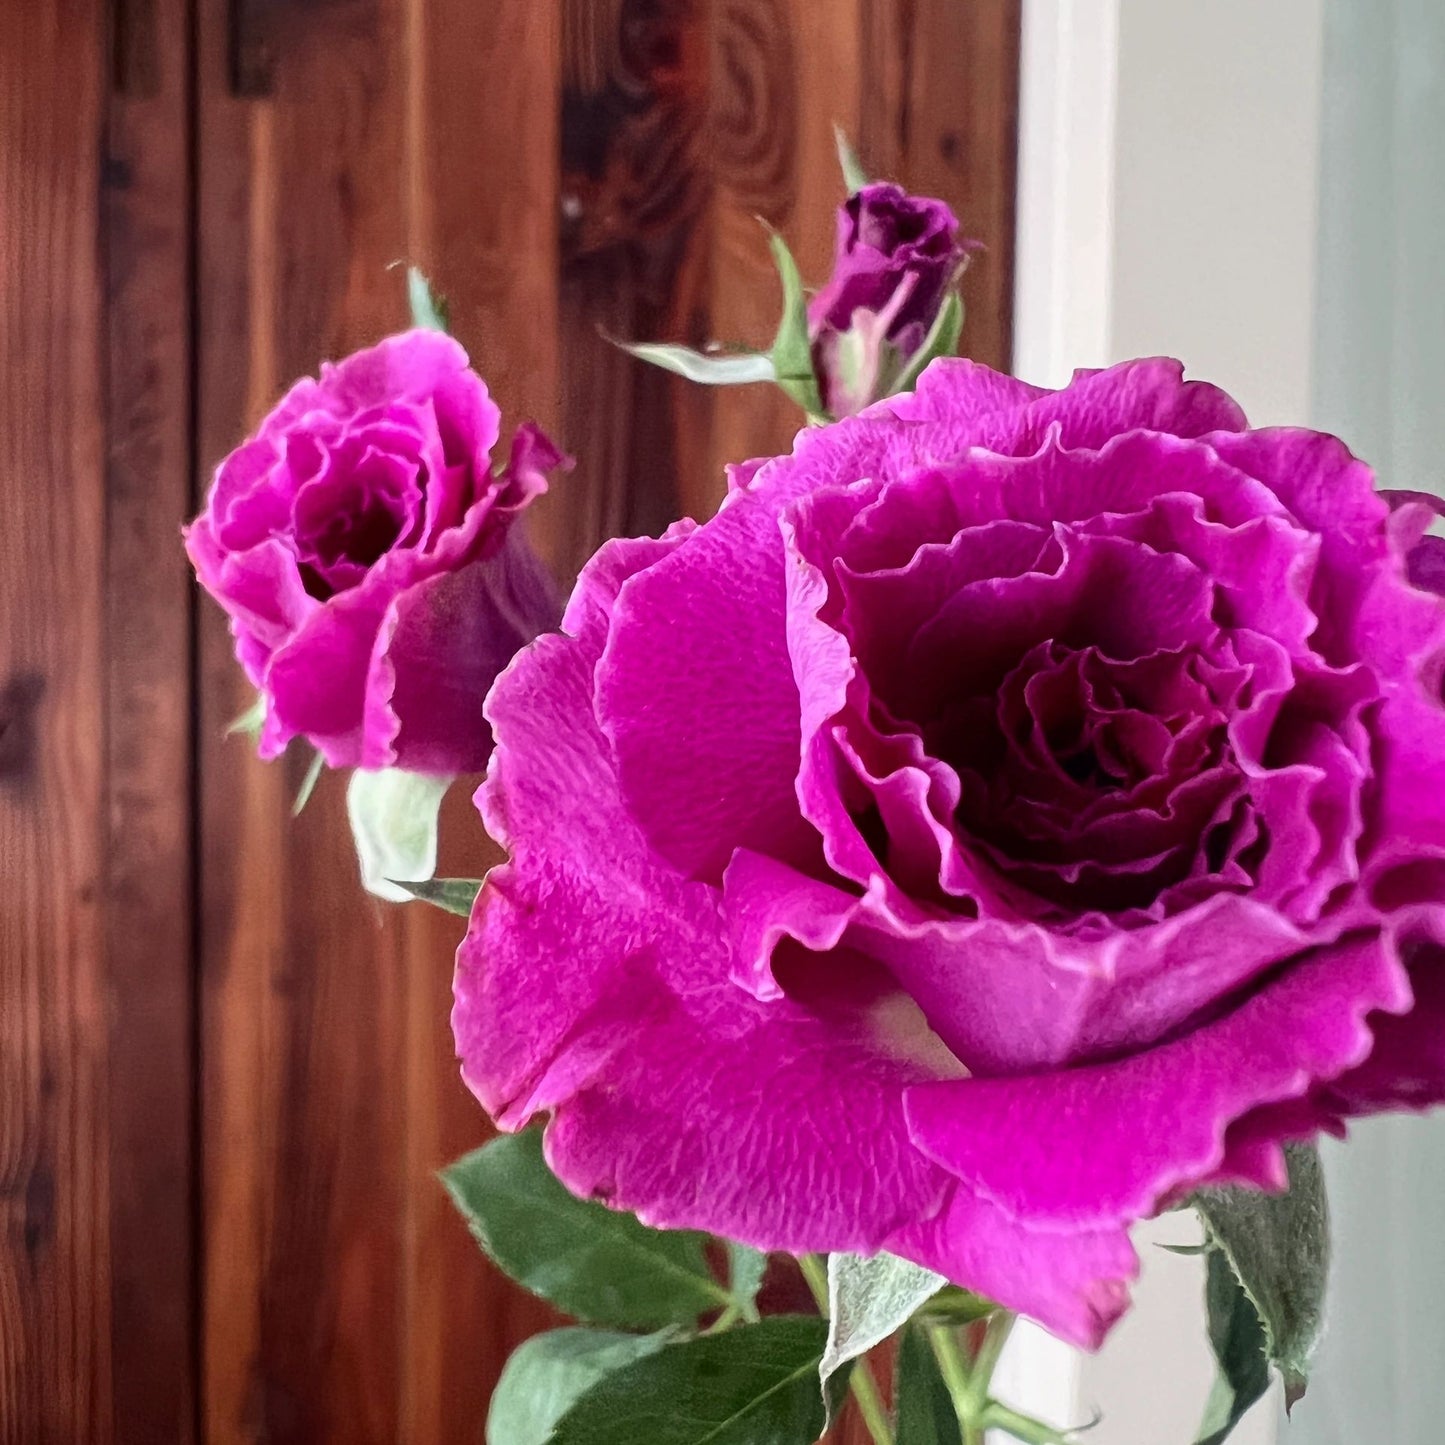 Rose[Ramukan|ラムカン] - Rare Japanese Cutting Rose| 1.5 Gallon-OwnRoot| Wavy Bloom| Ruffle lace| 草药| Similar to Sheherazad | Sun Tolerant | herb